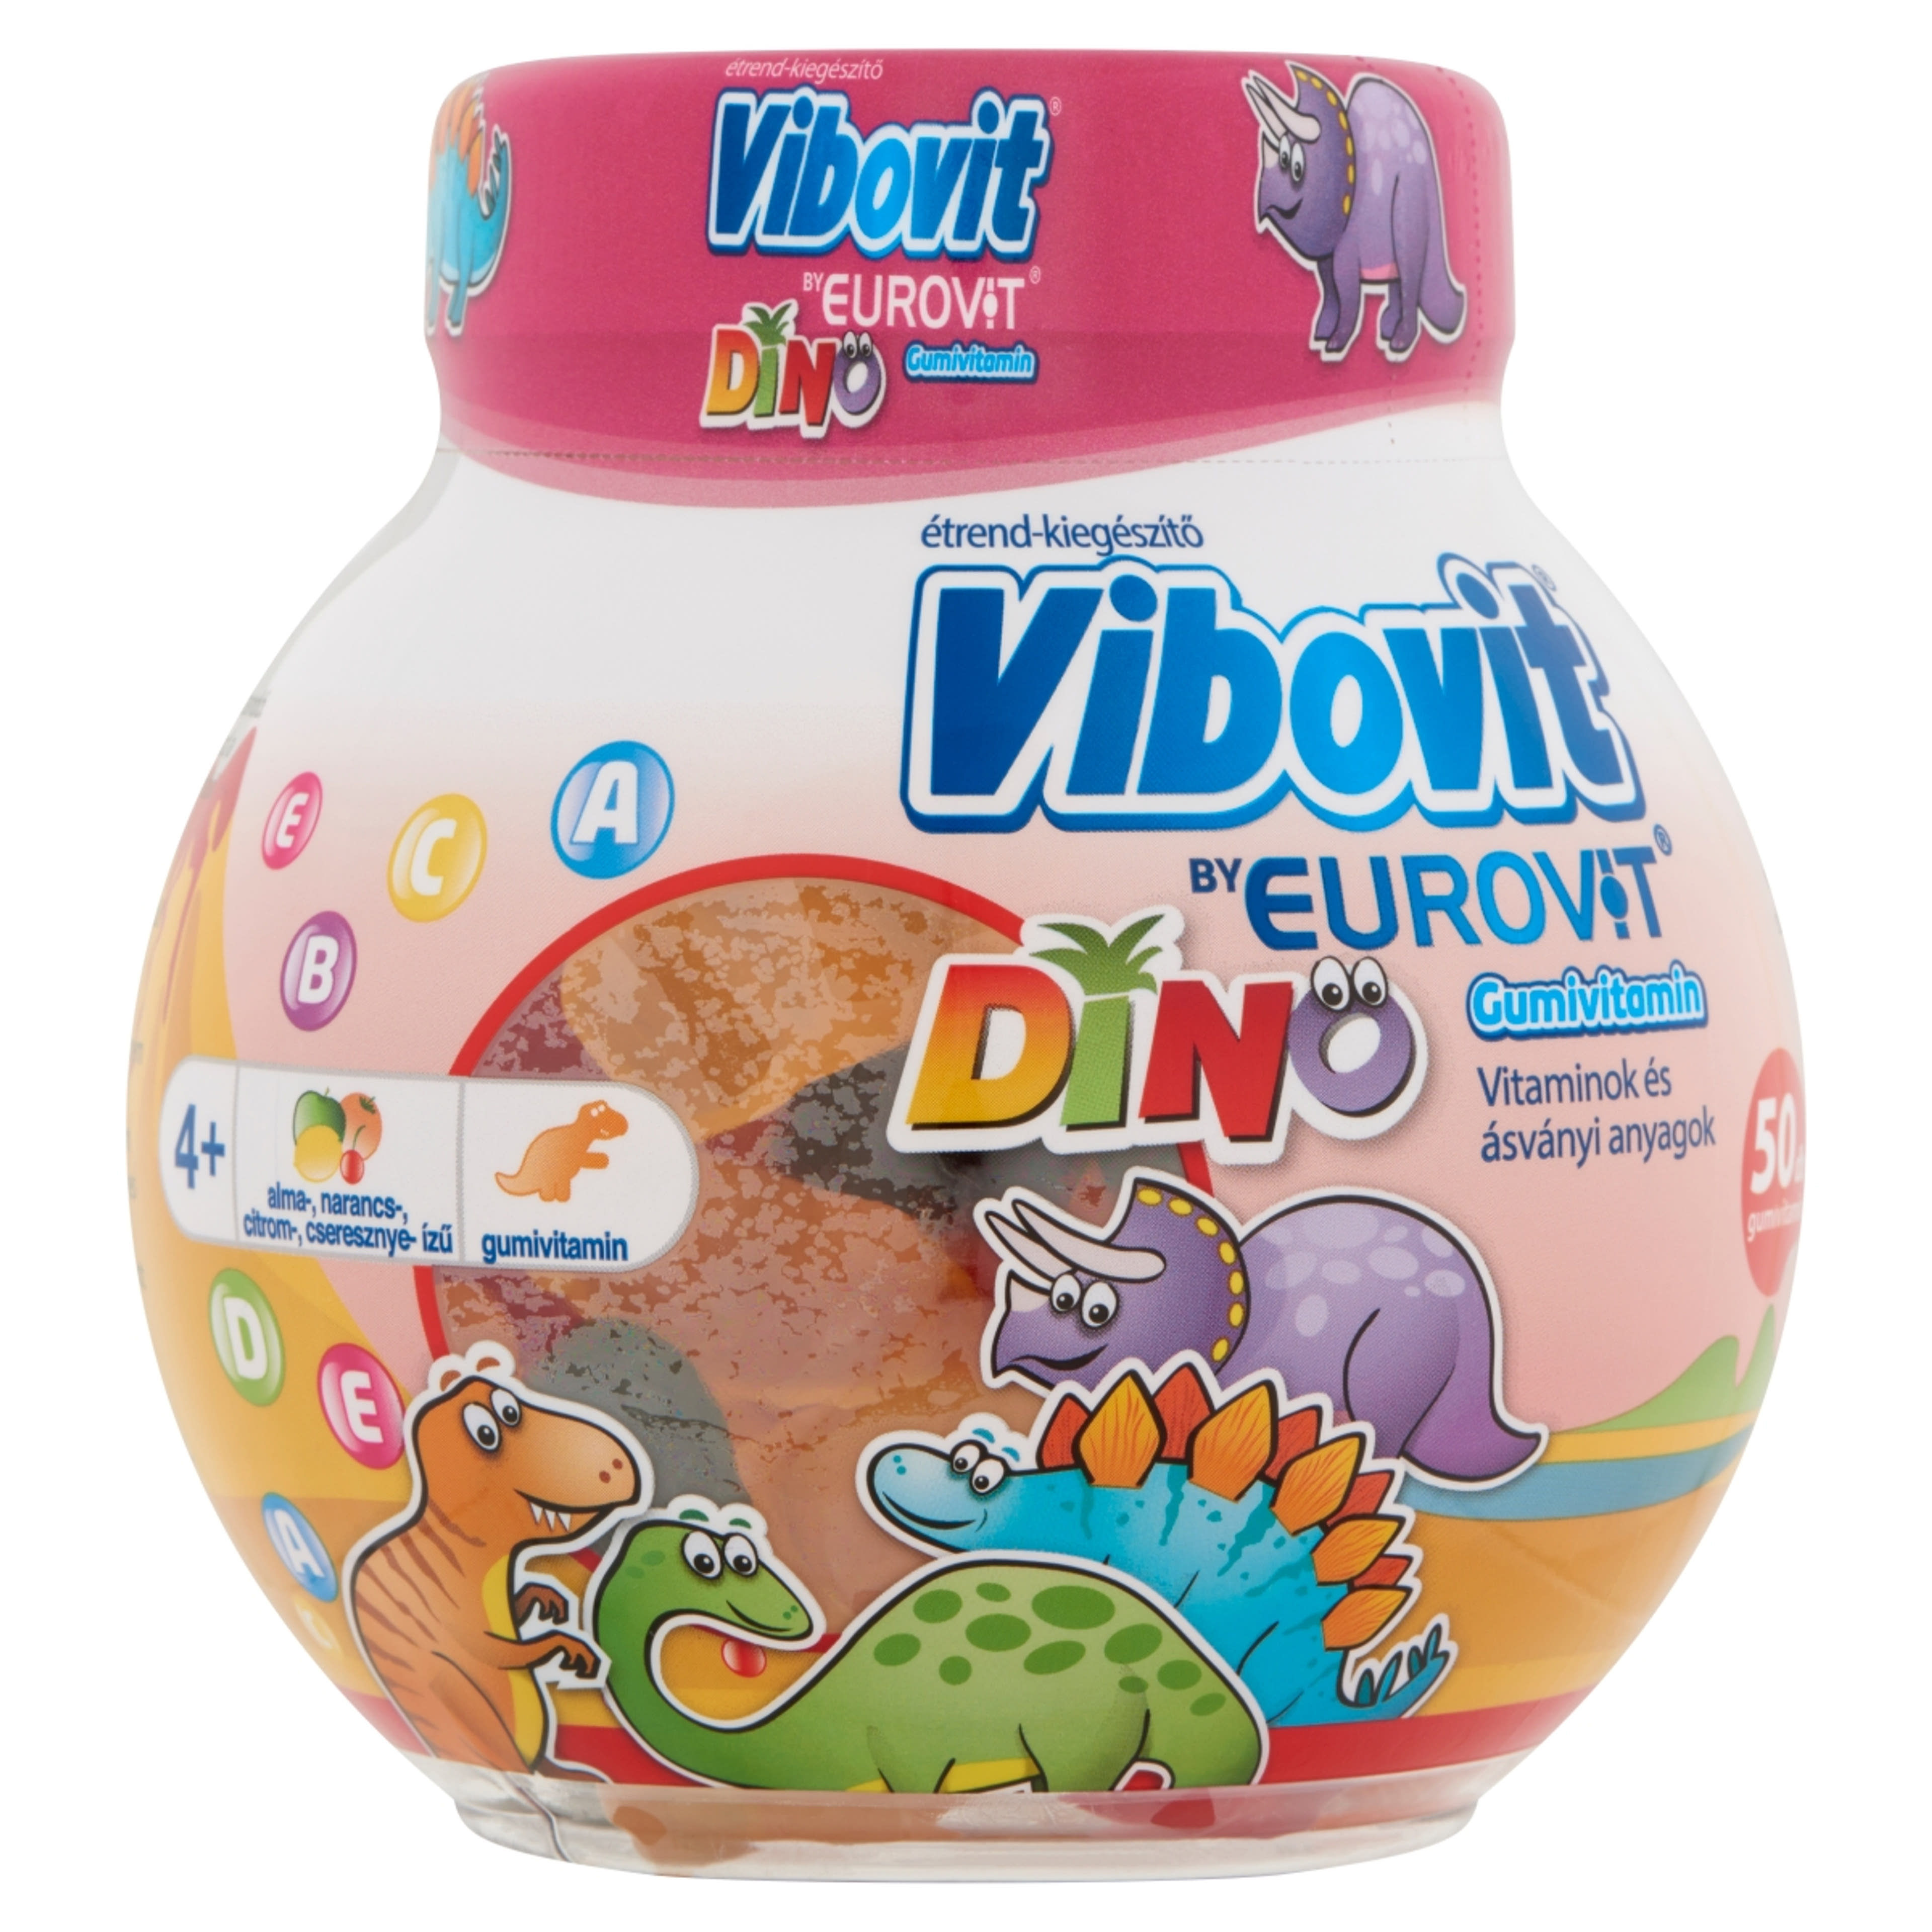 Vibovit BY EUROVIT Dino Gyümölcsös Ízű Gumivitamin - 50 db